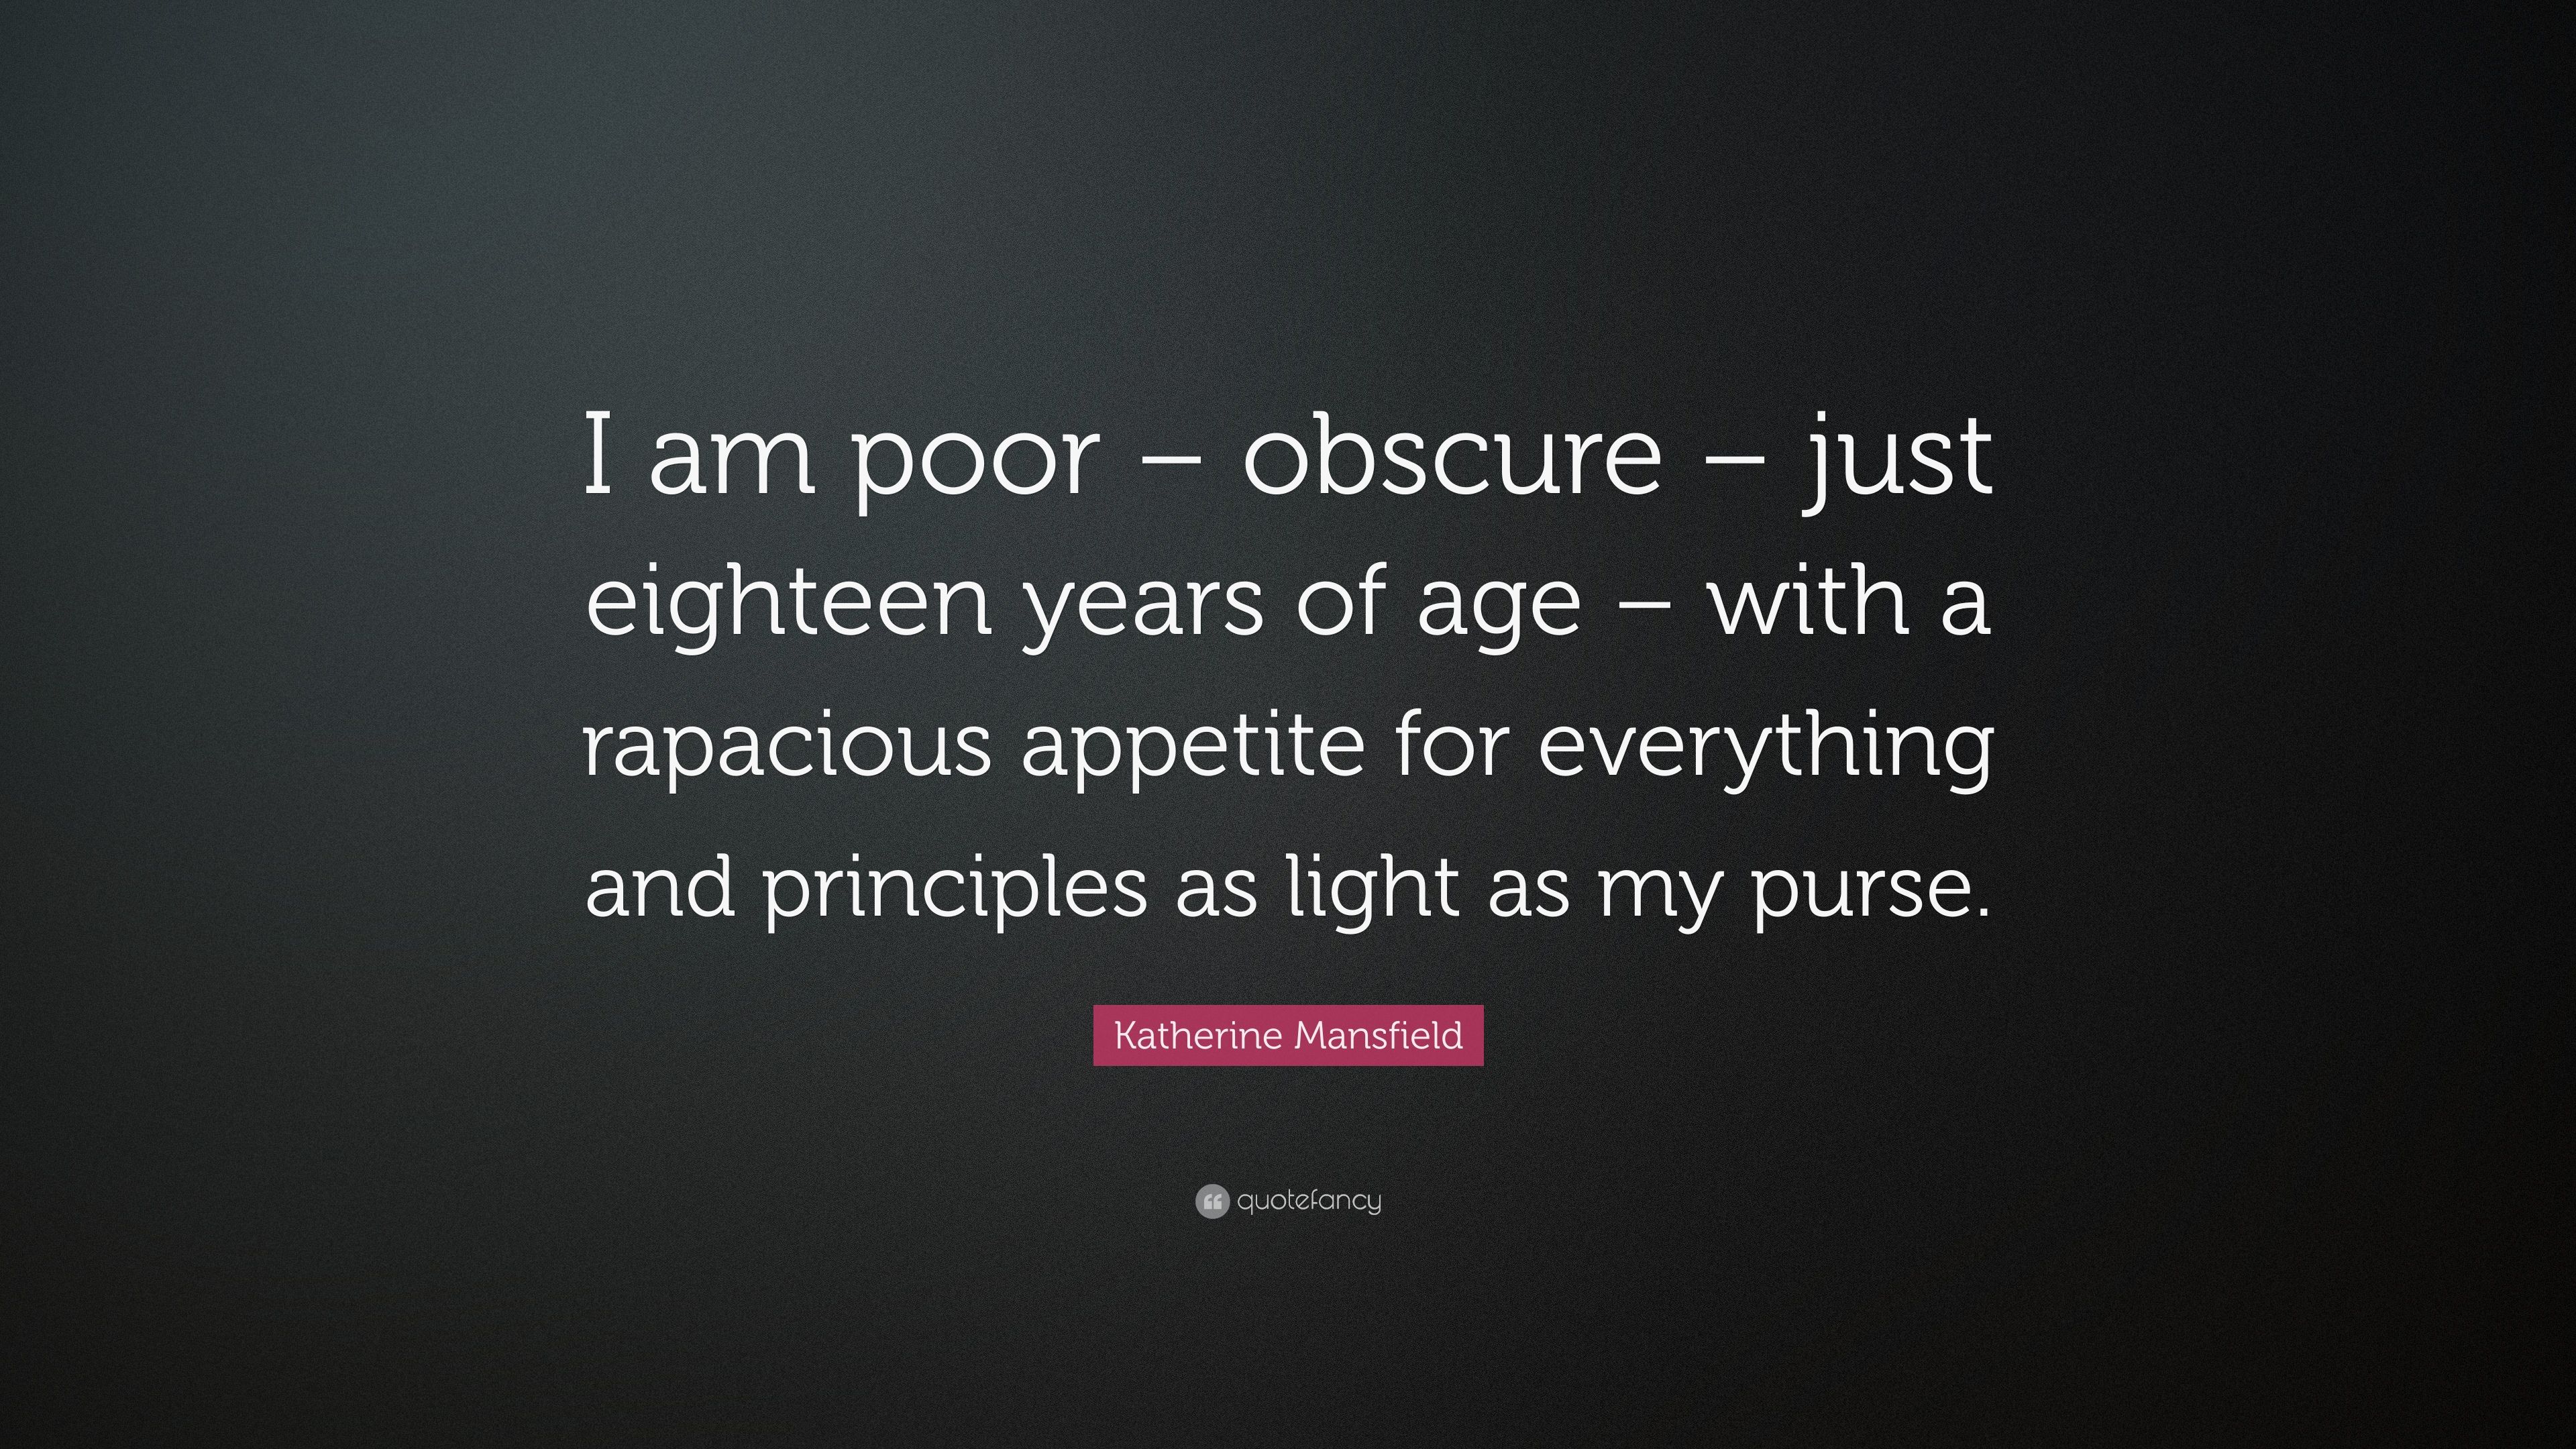 Katherine Mansfield Quote: “I am poor